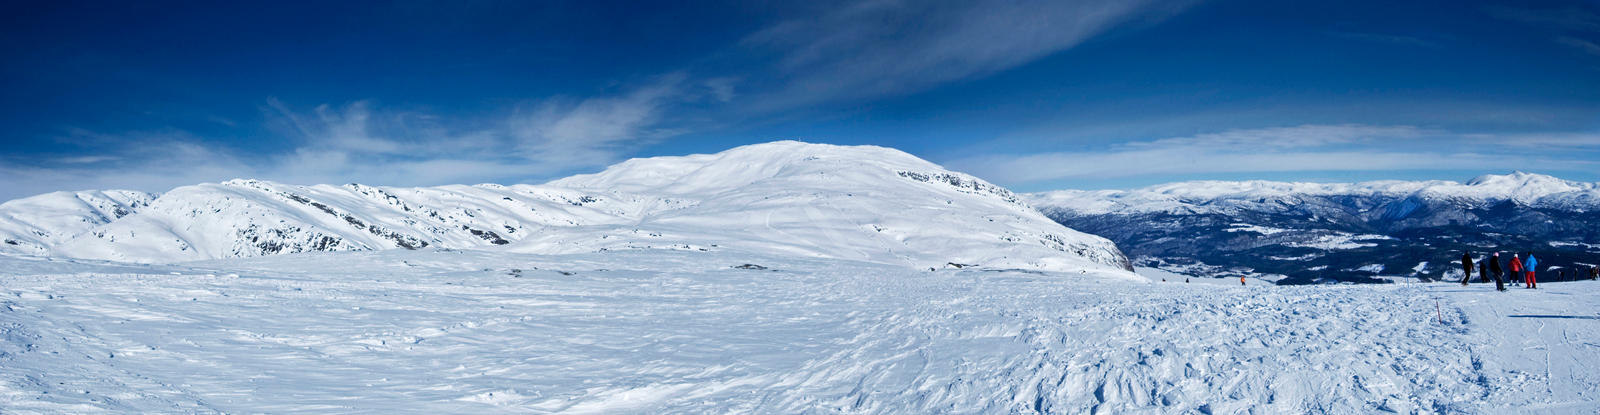 Winter in Norway II